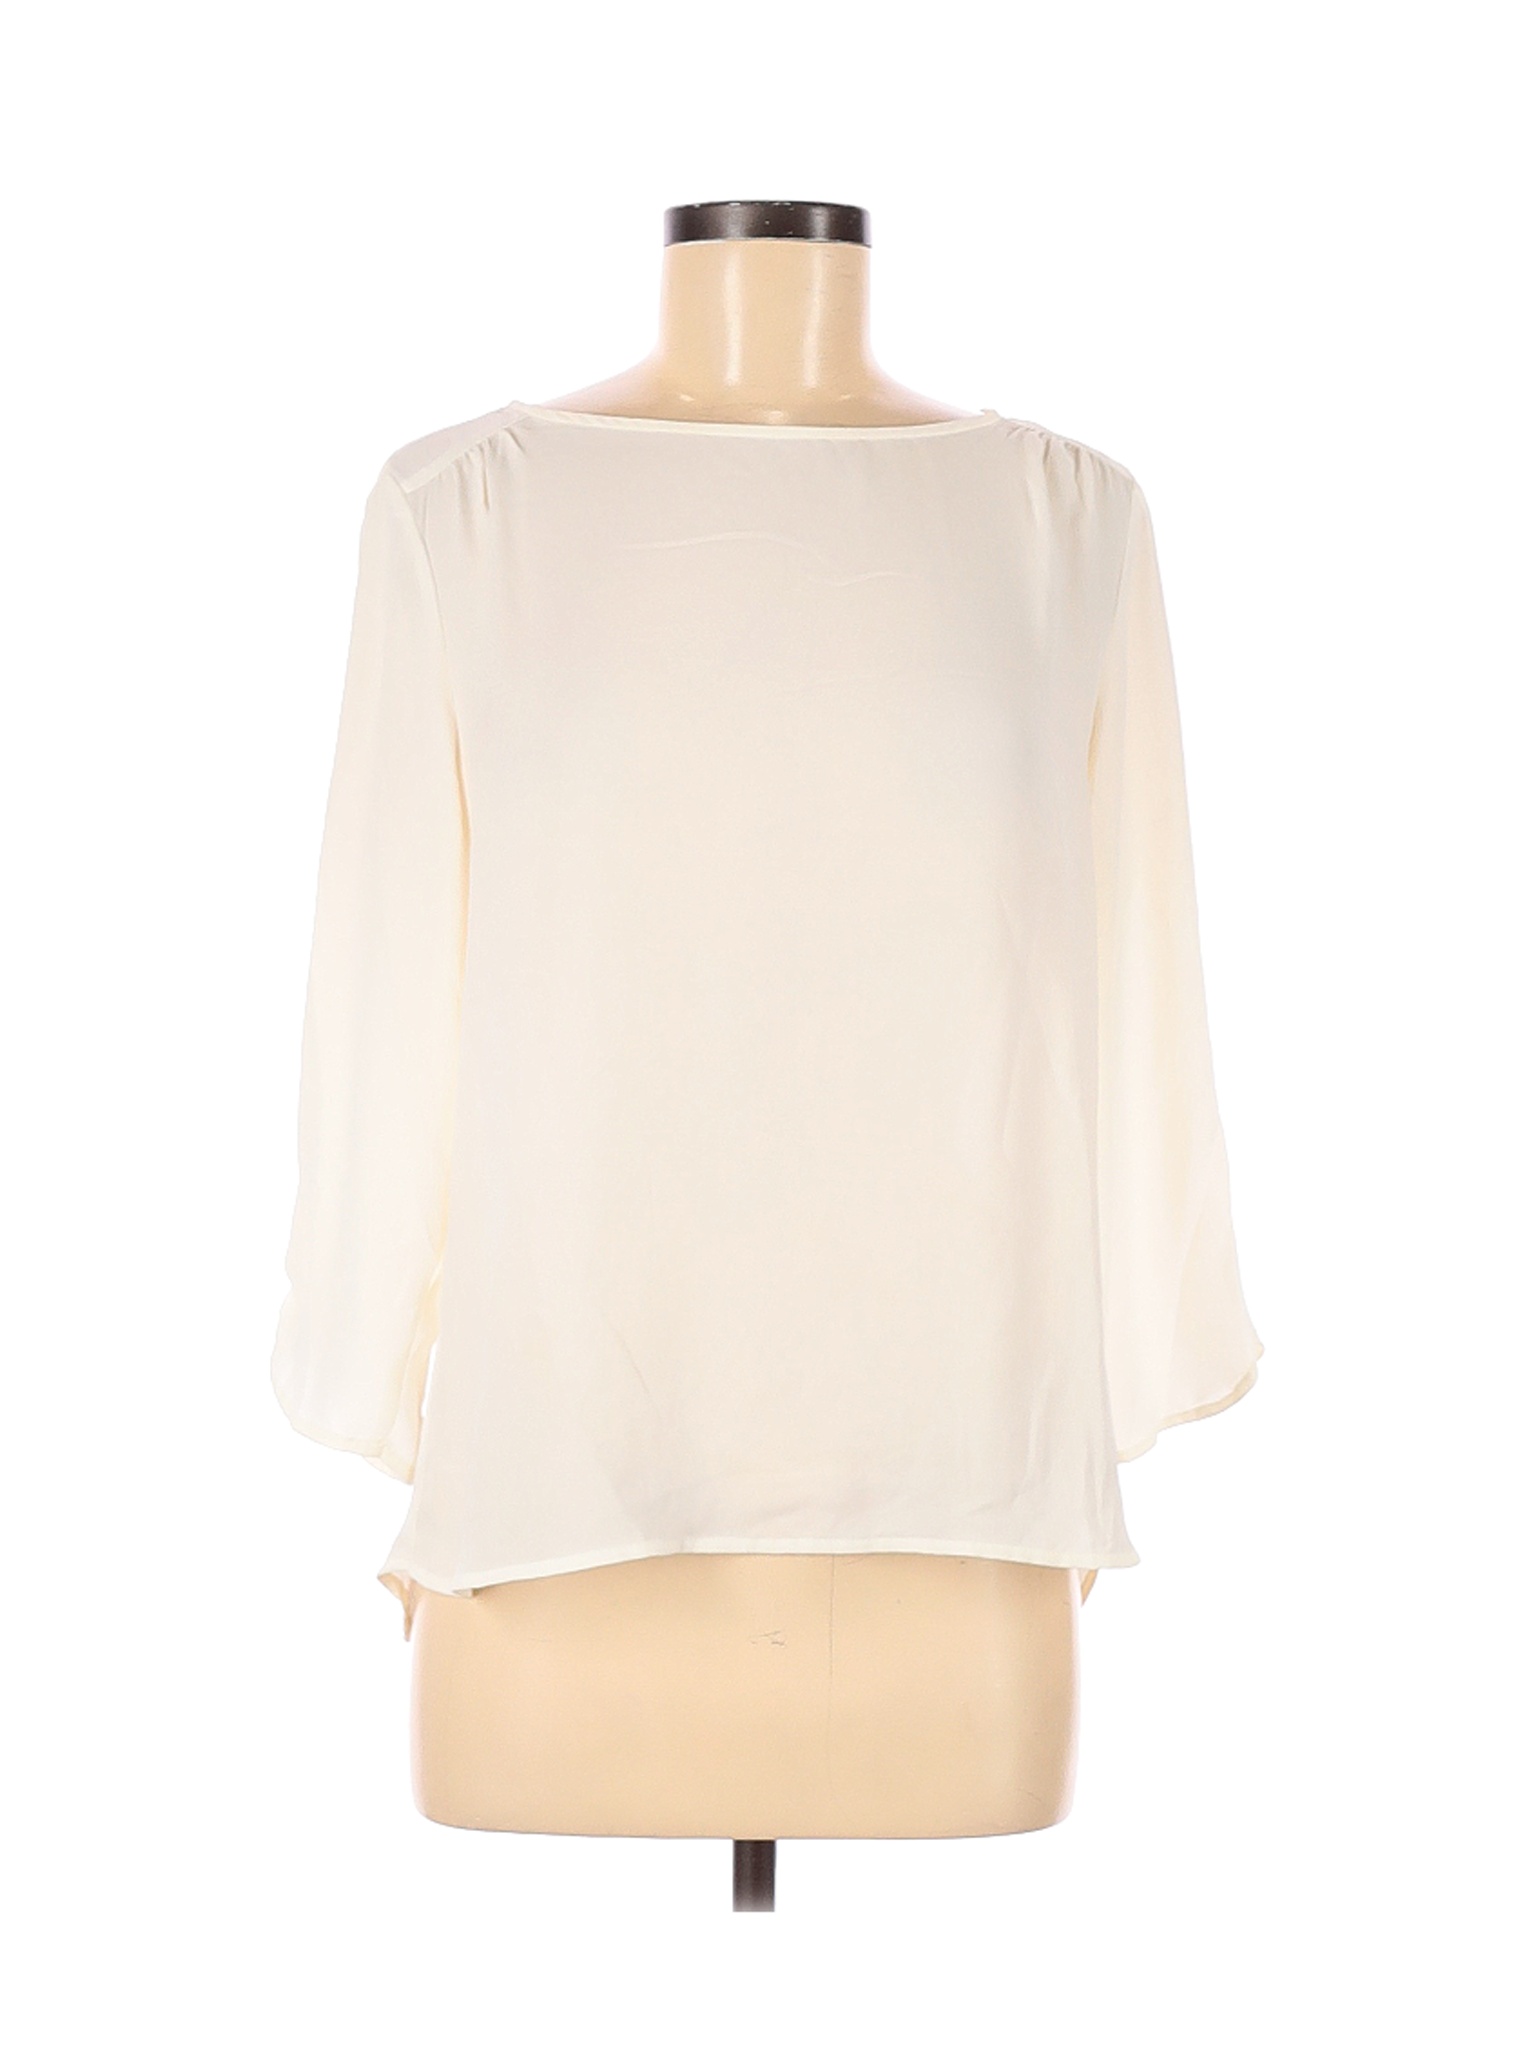 The Limited Women Ivory 3/4 Sleeve Blouse M | eBay